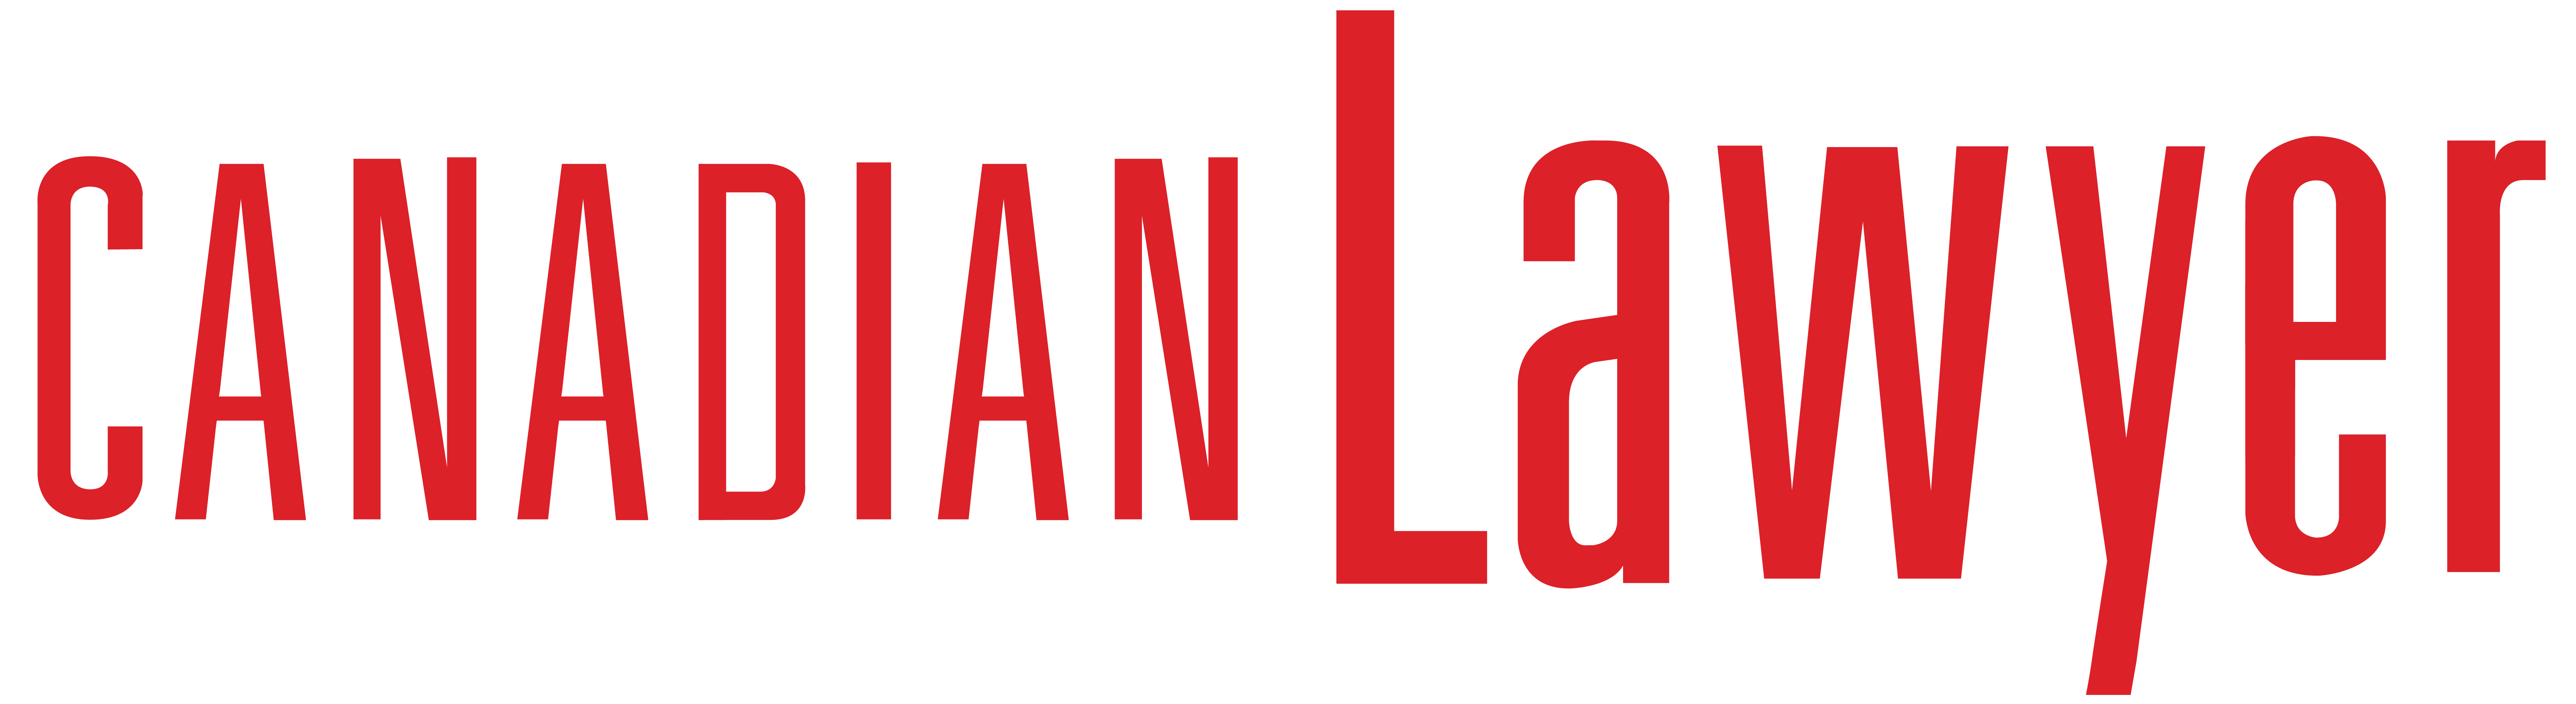 Canadian Lawyer Logo